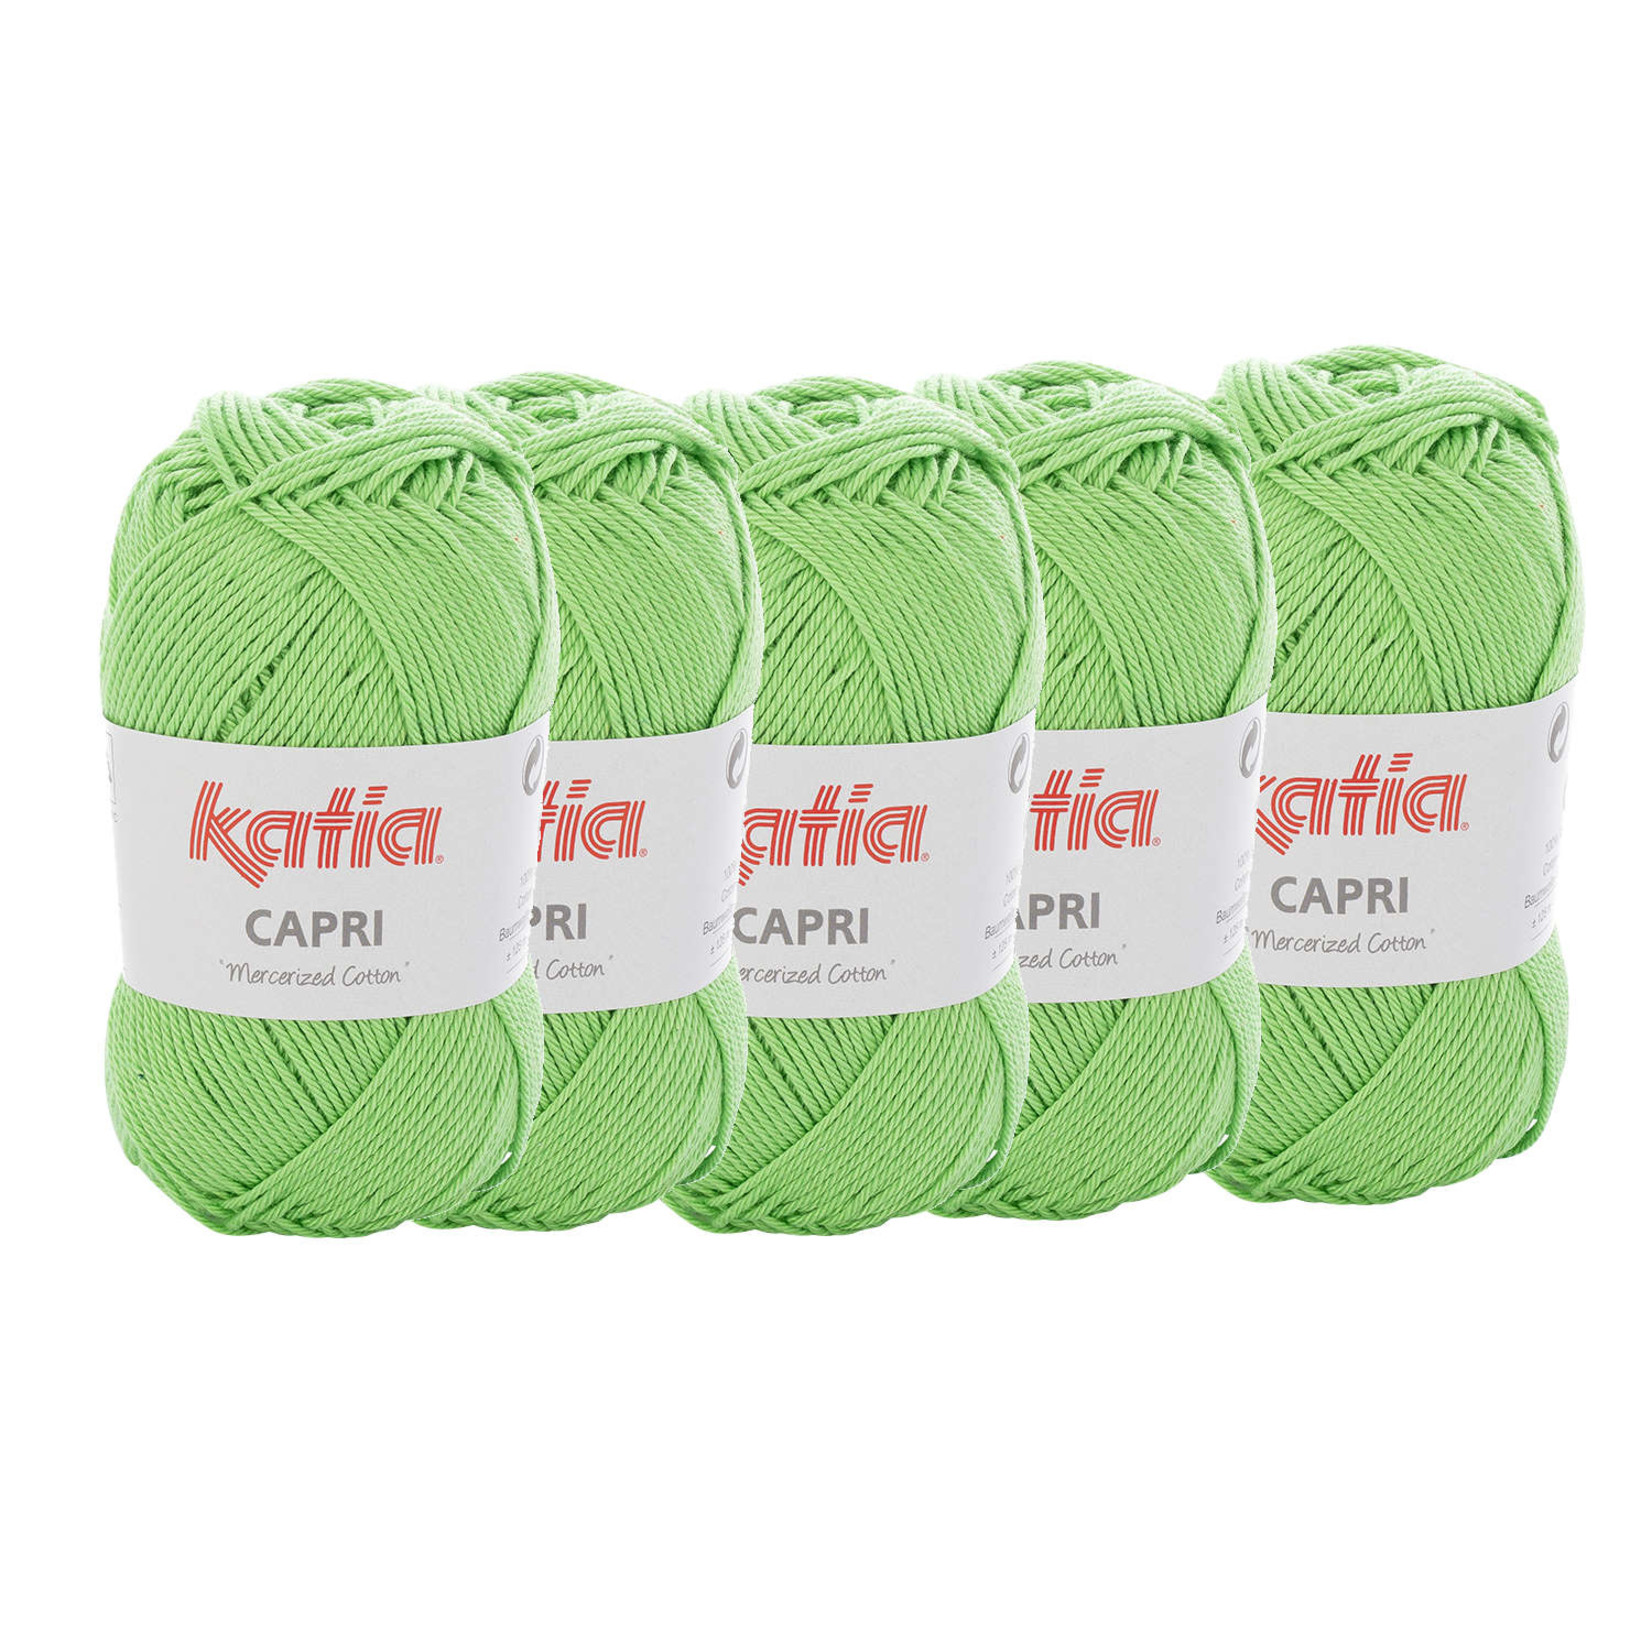 Katia Katia Capri - kleur 149 Briljantgroen - bundel 5 x 50 gr. / 125 m. - 100% katoen